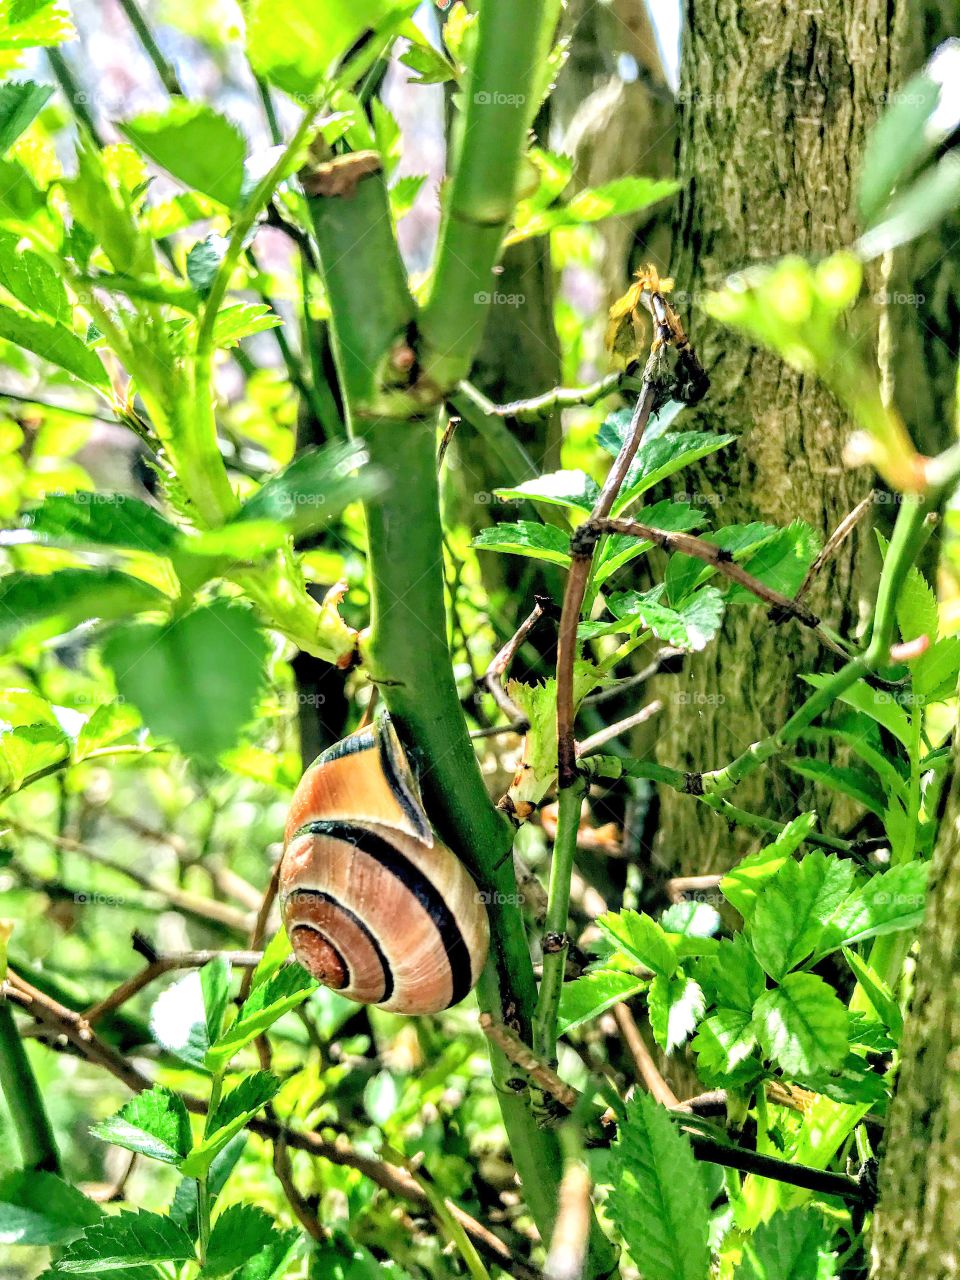 Snail at snail's pace